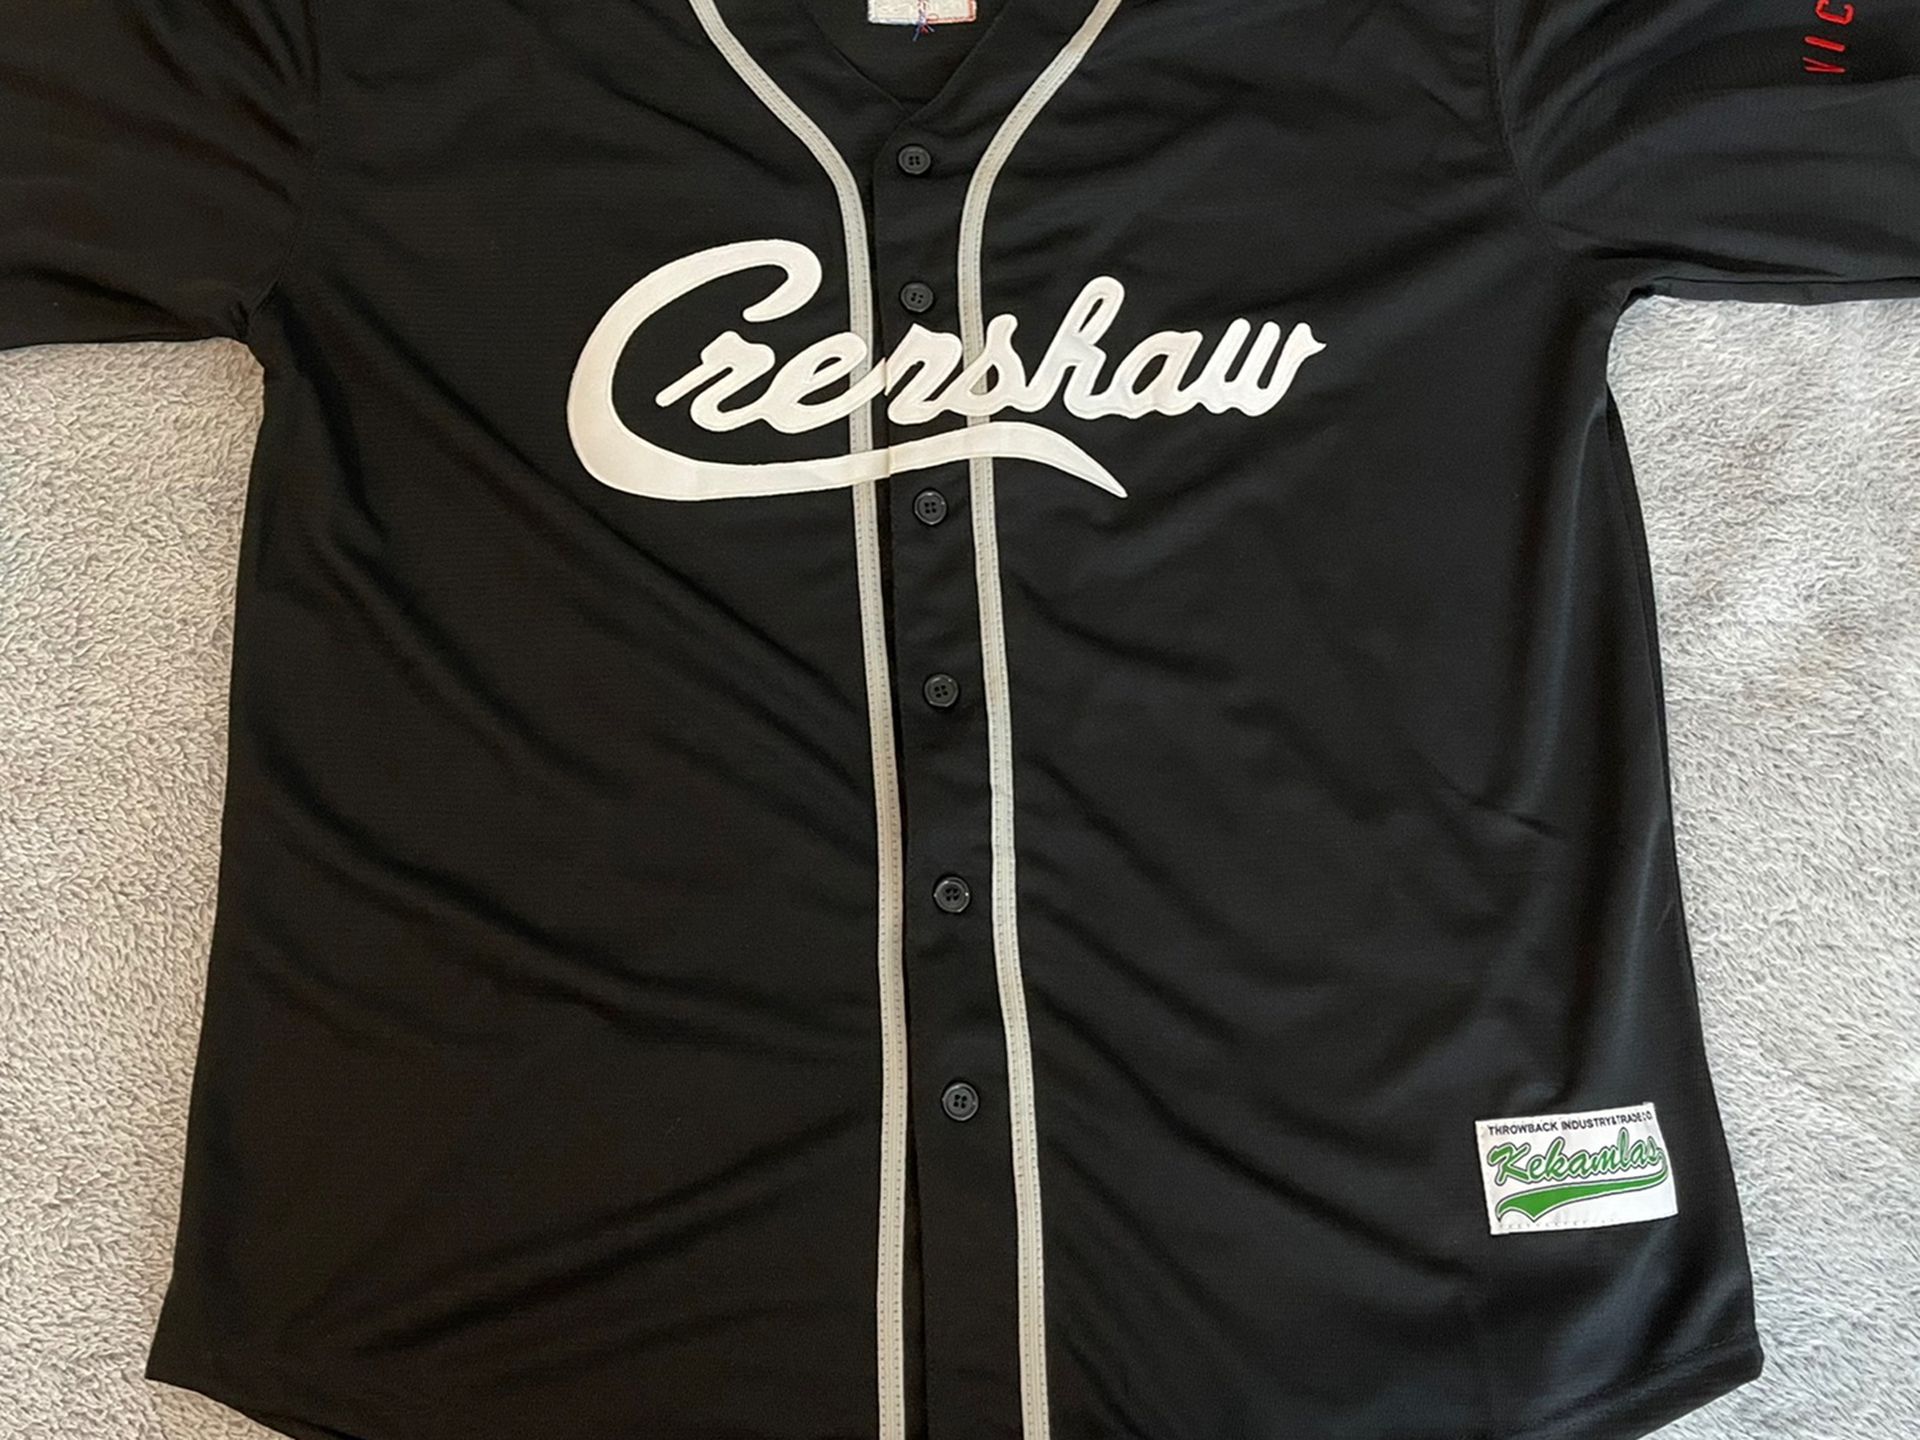 Crenshaw/Victory Lap Baseball Jersey